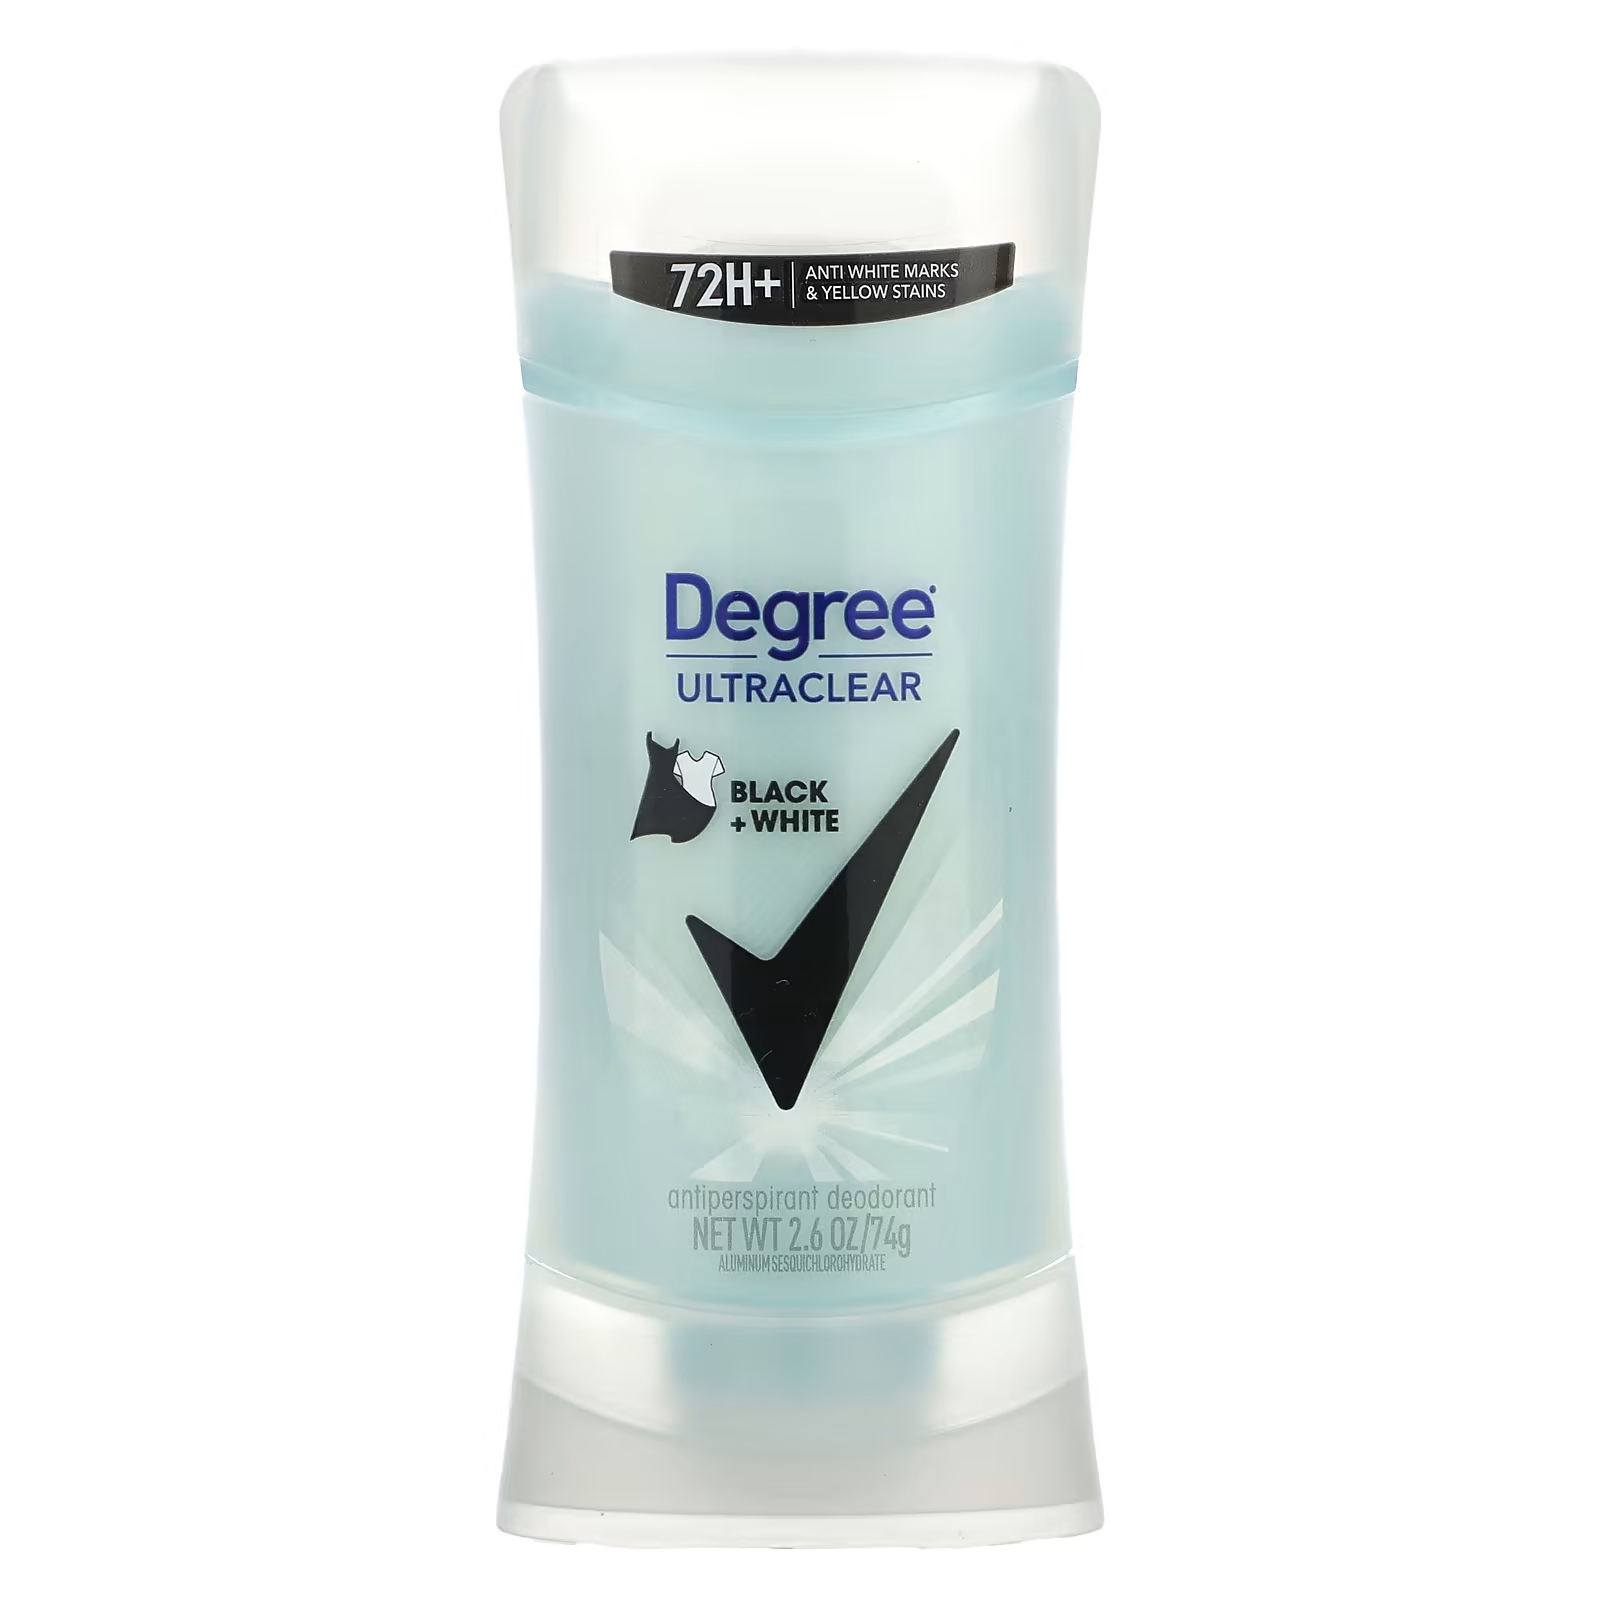 Дезодорант-антиперспирант Degree UltraClear Black + White degree advanced 72 hour motionsense дезодорант антиперспирант без остановок 76 г 2 7 унции